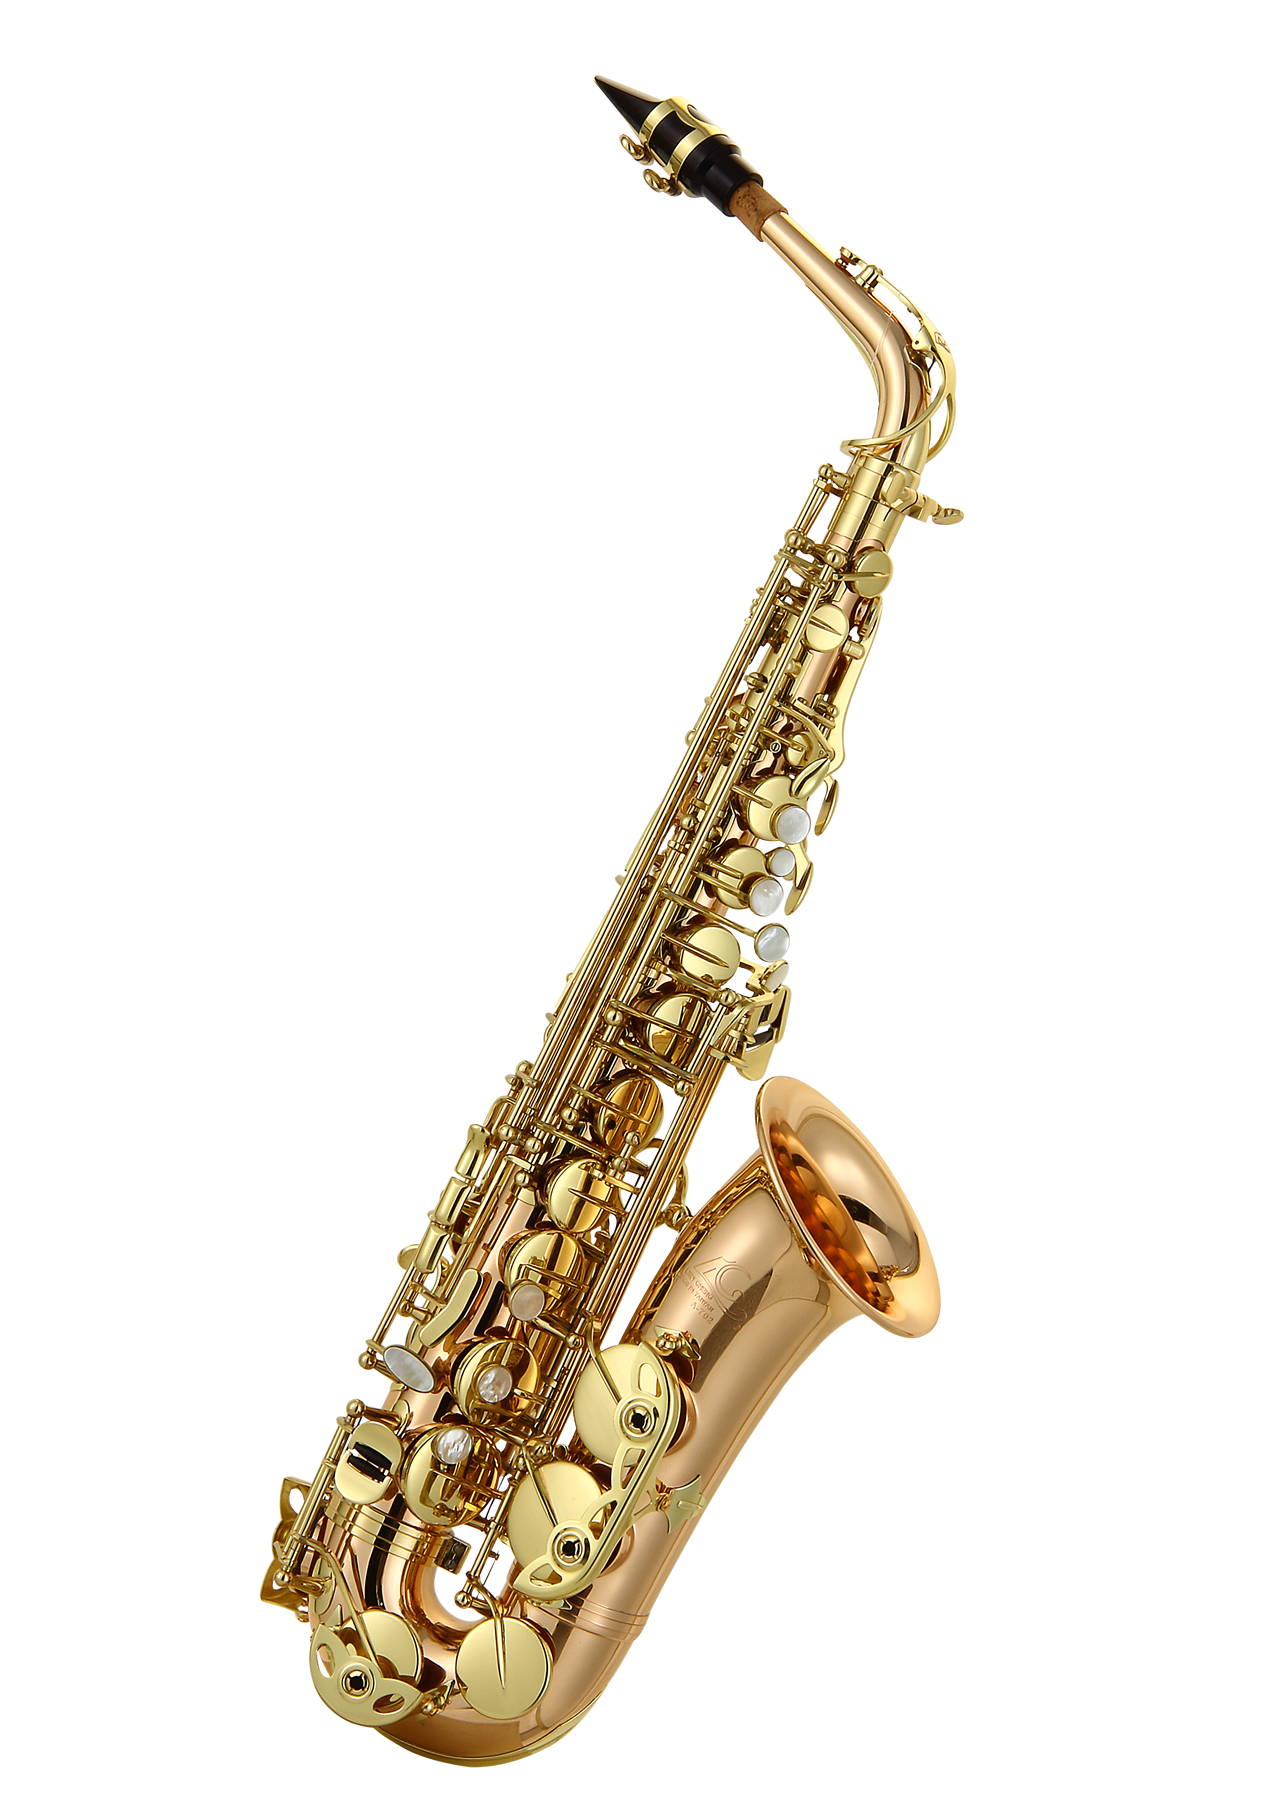 Saxophone PNG HD - 129892